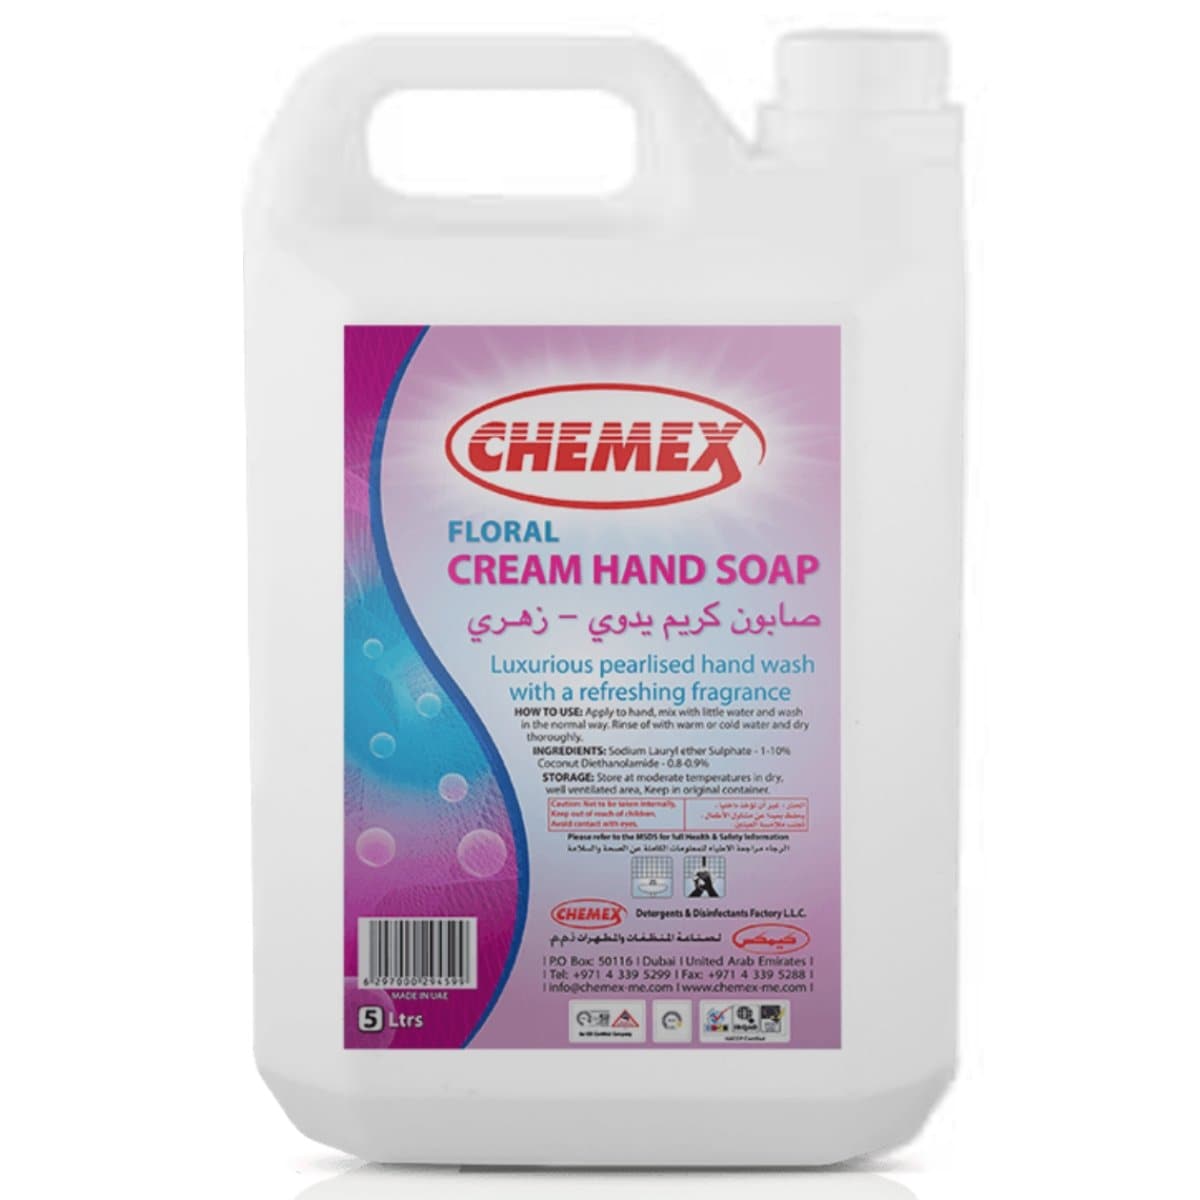 Chemex Liquid Cream Hand Soap, Floral, 5 liter